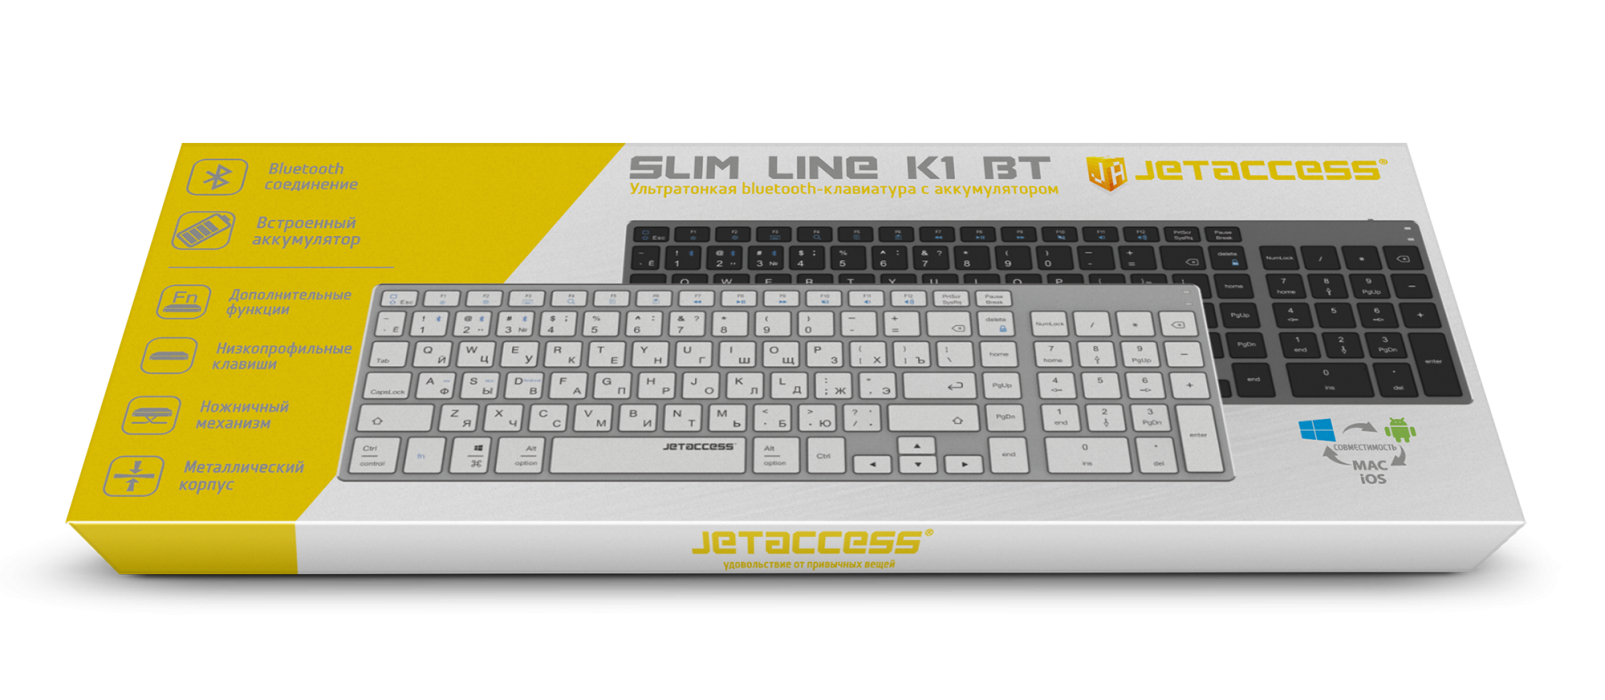 Ультратонкая bluetooth-клавиатура с аккумулятором SLIM LINE K1 BT7